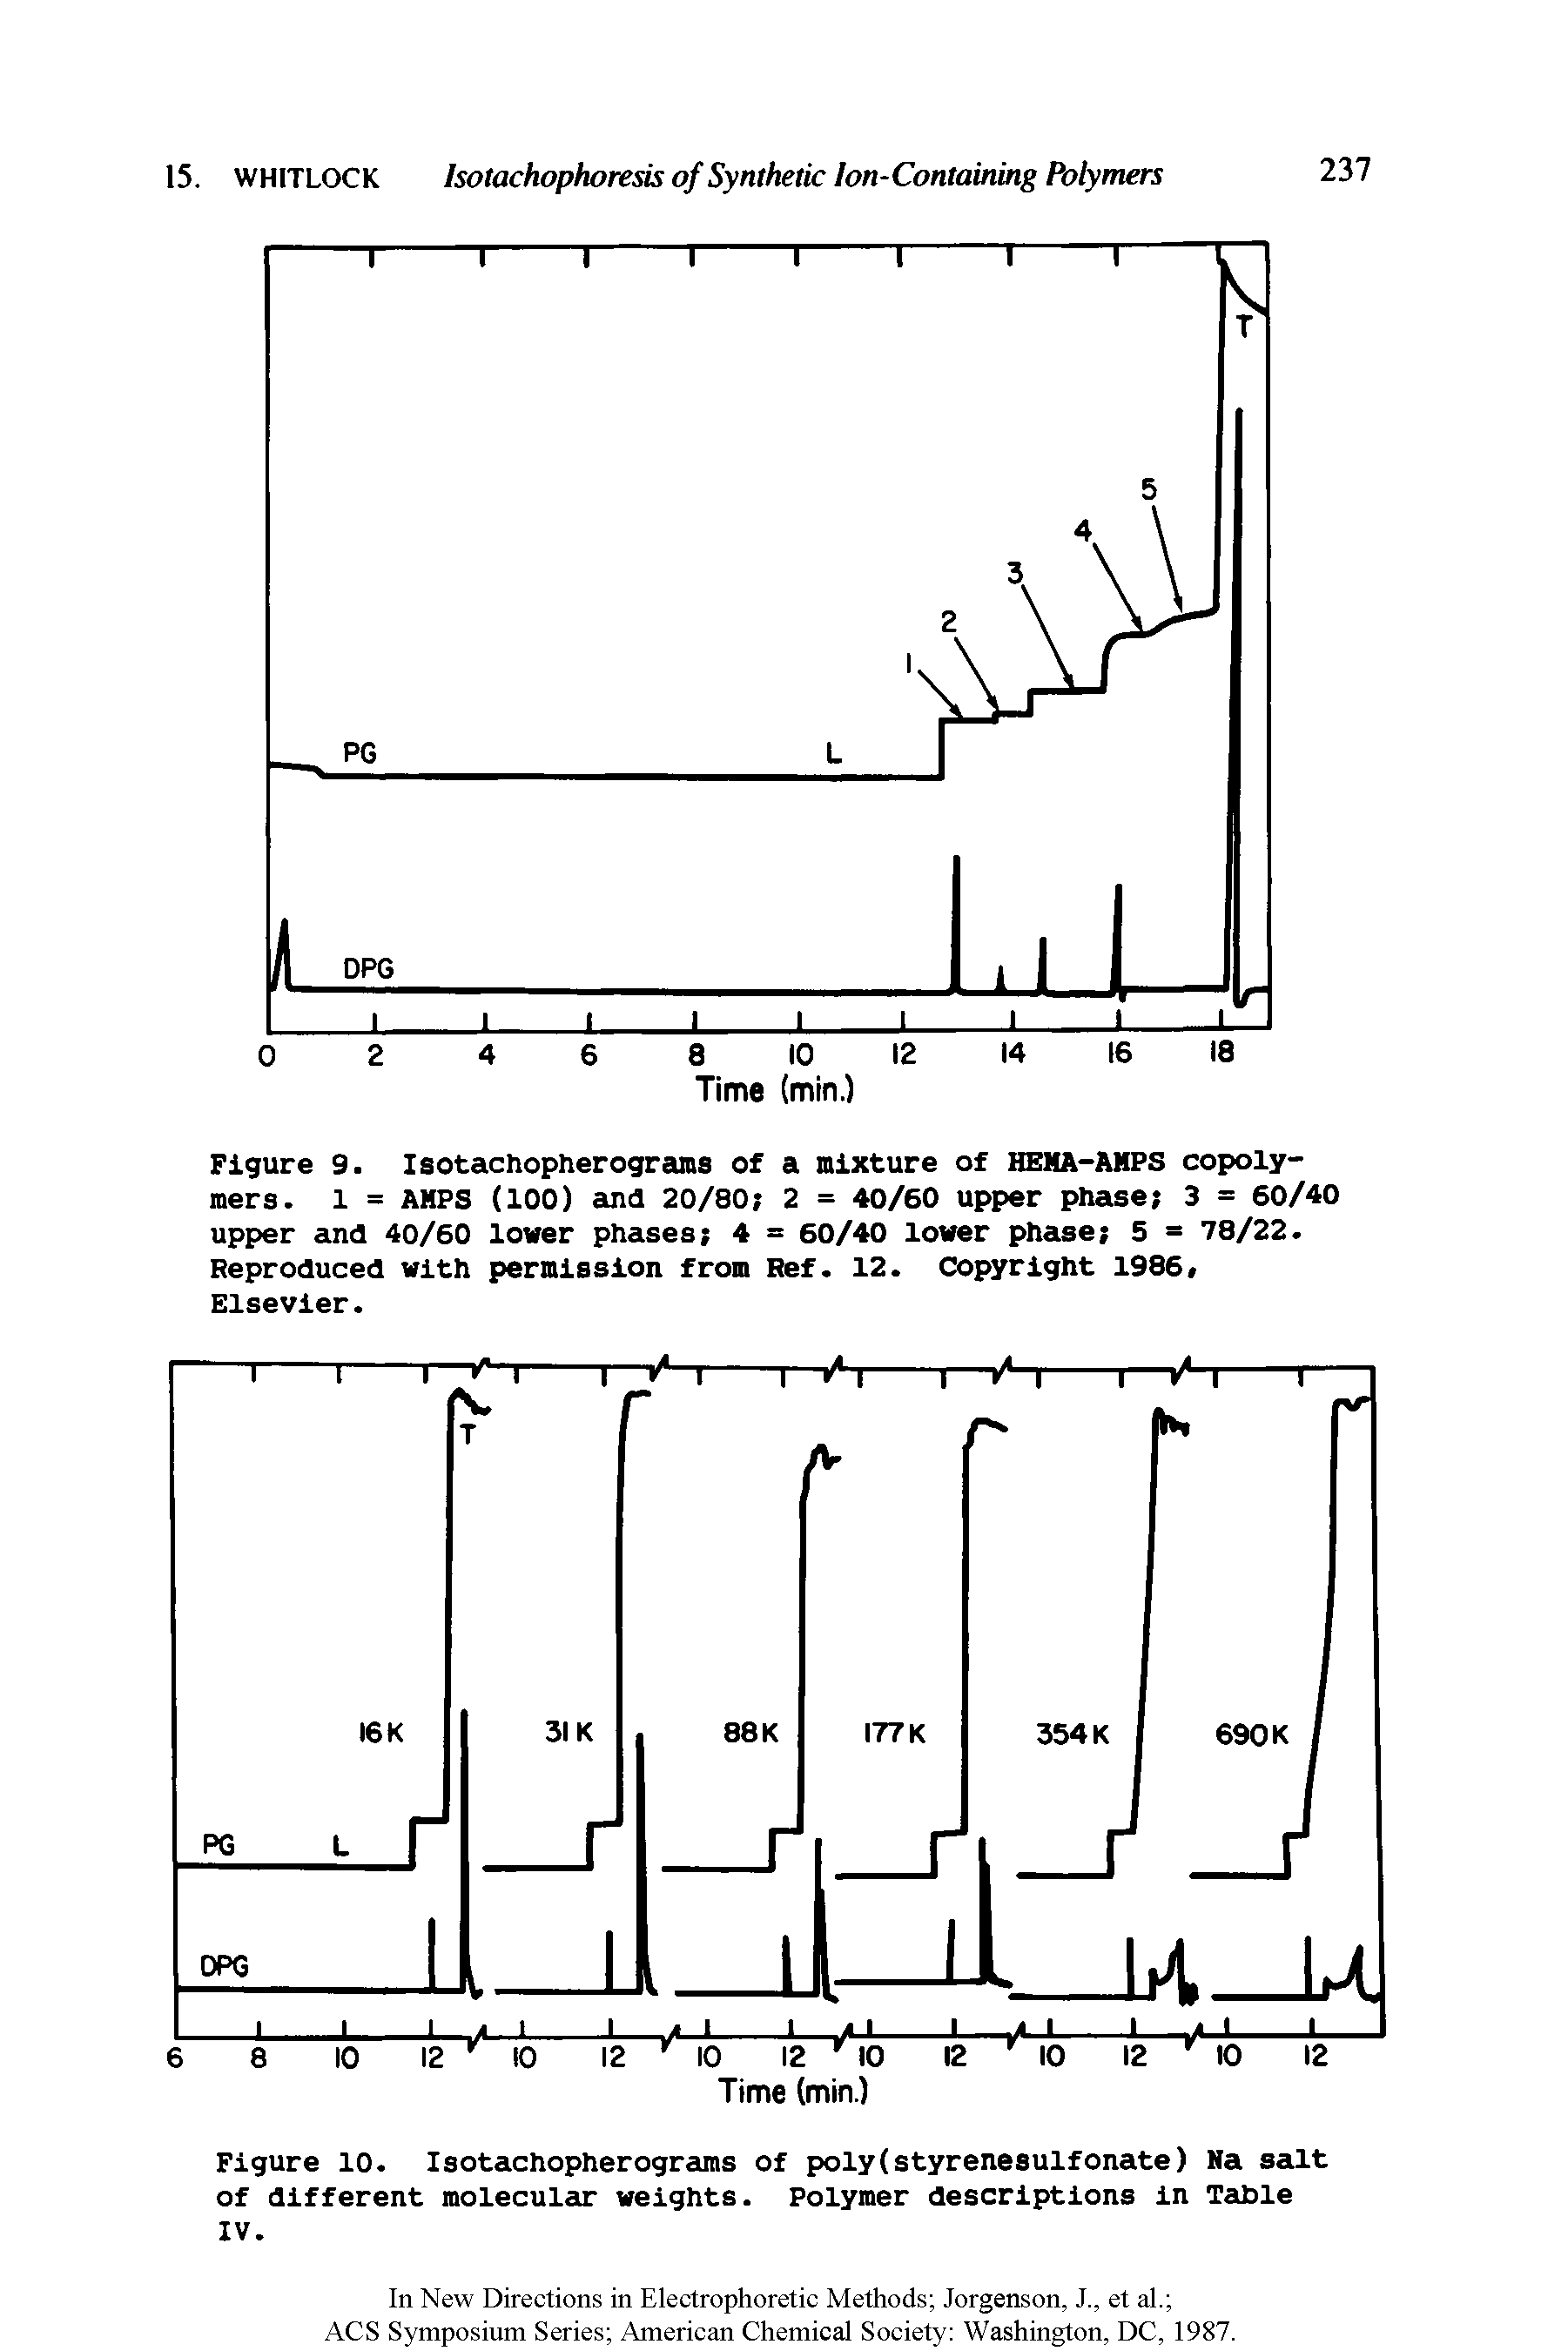 Figure 10. IsotachopherogrMS of poly(styrenesulfonate) Na salt of different molecul u weights. Polymer descriptions in TaJsle IV.